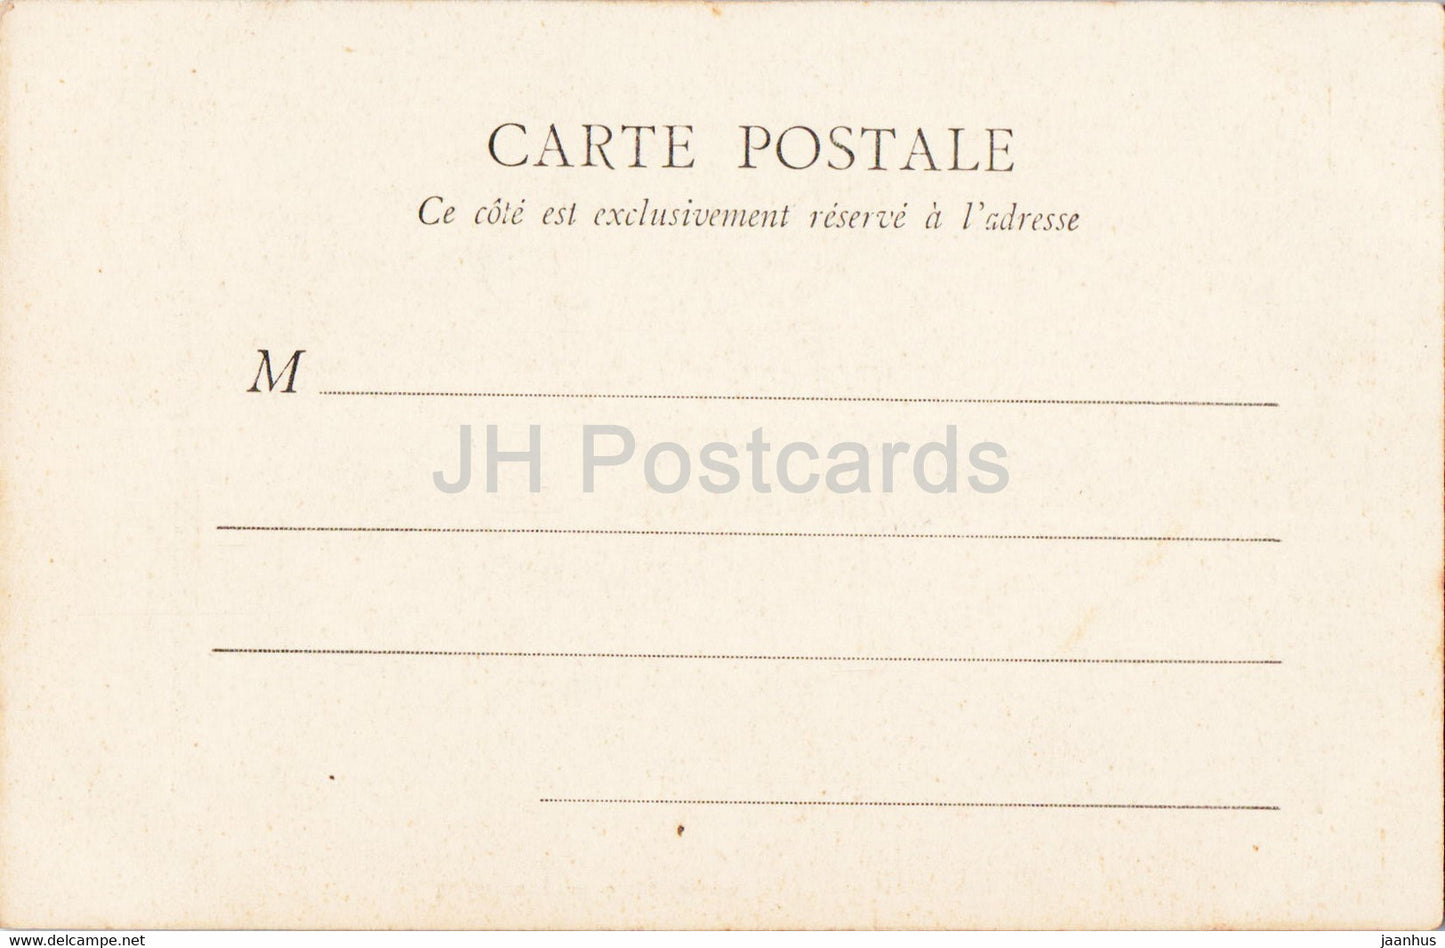 Amiens - Cathedrale - Portail de la Vierge doree - cathedral - 56 - old postcard - France - unused